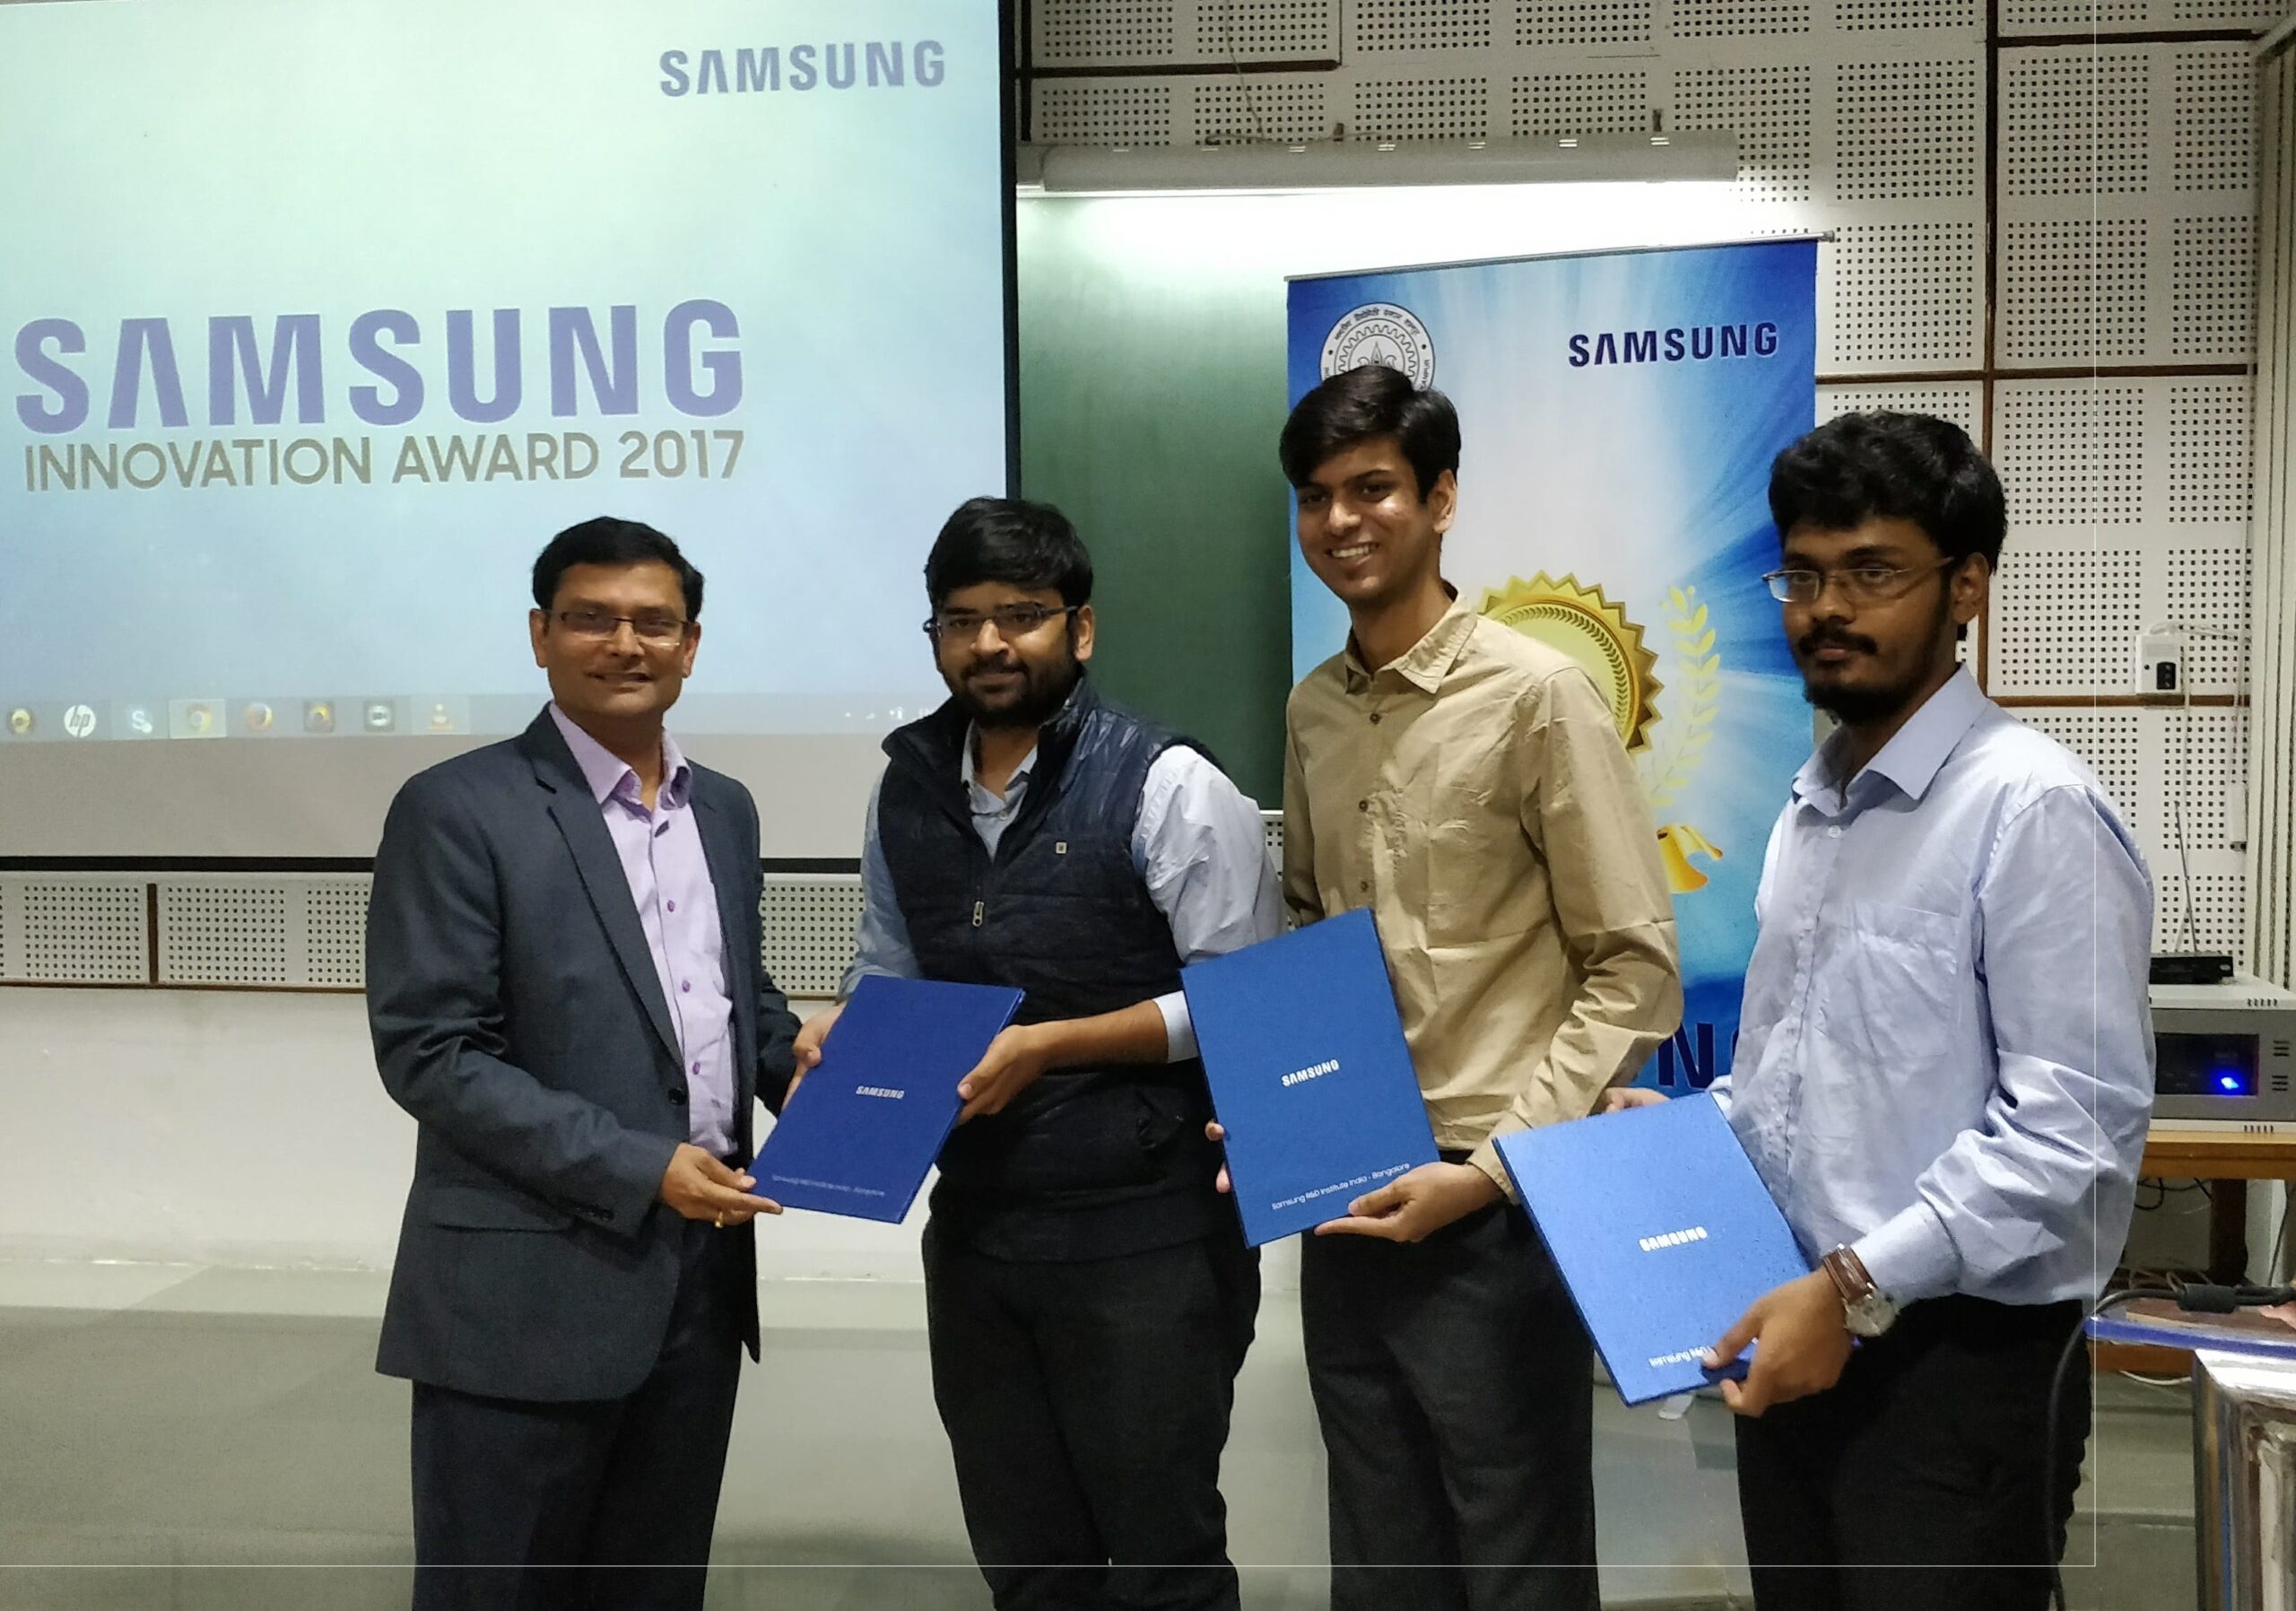 Samsung Innovation Awards 2017 Held at IIT Kanpur